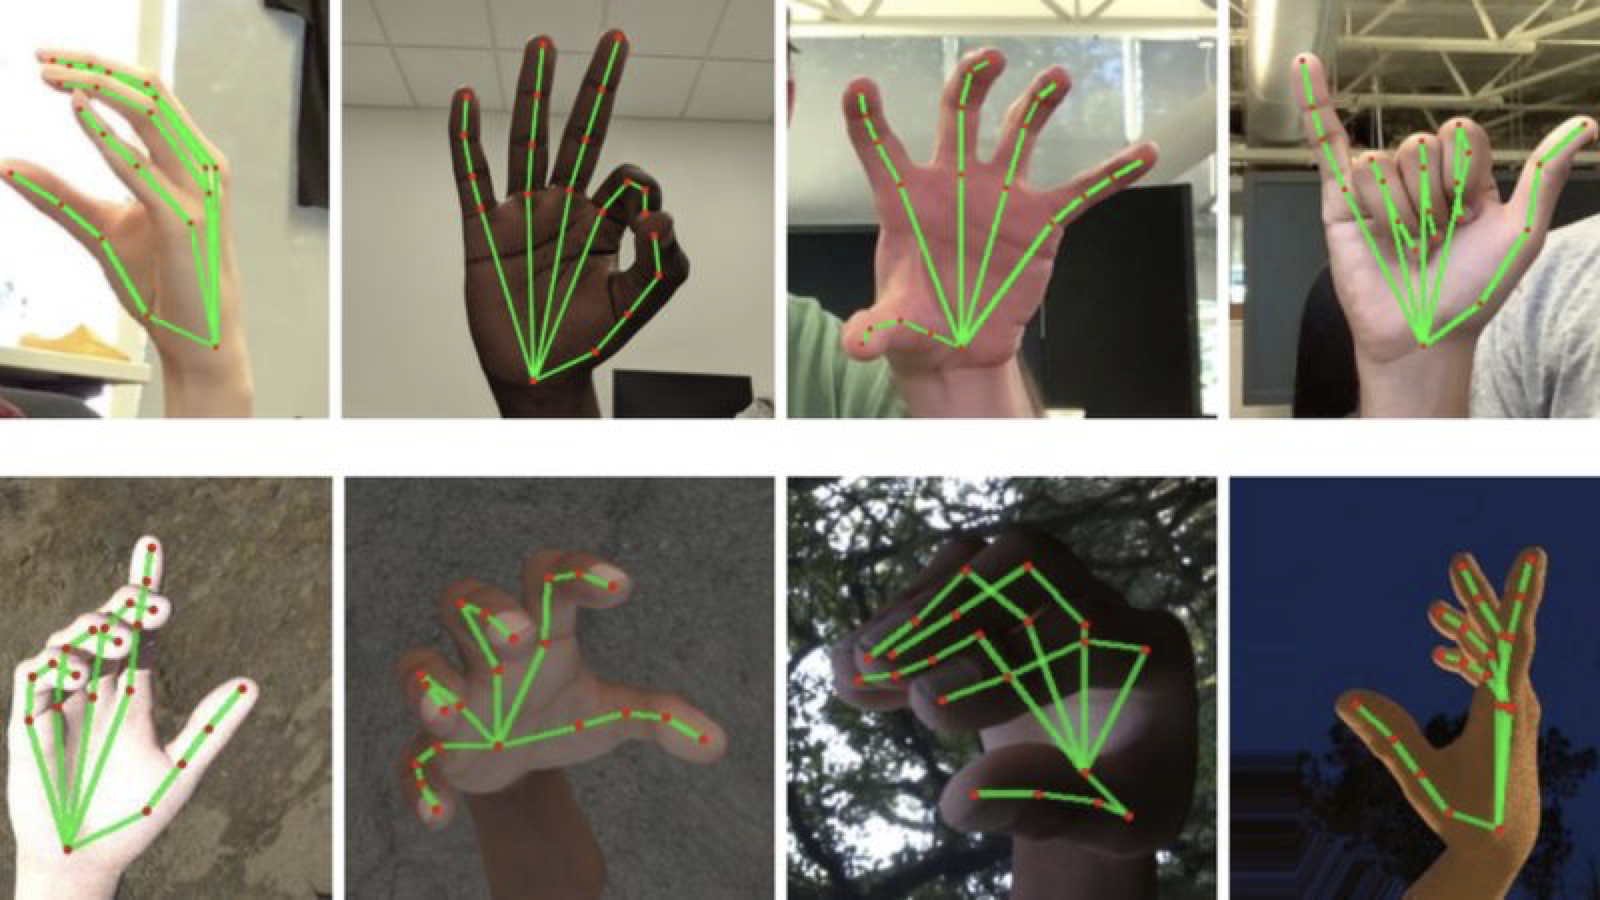 Hands as seen by an artificial intelligence.